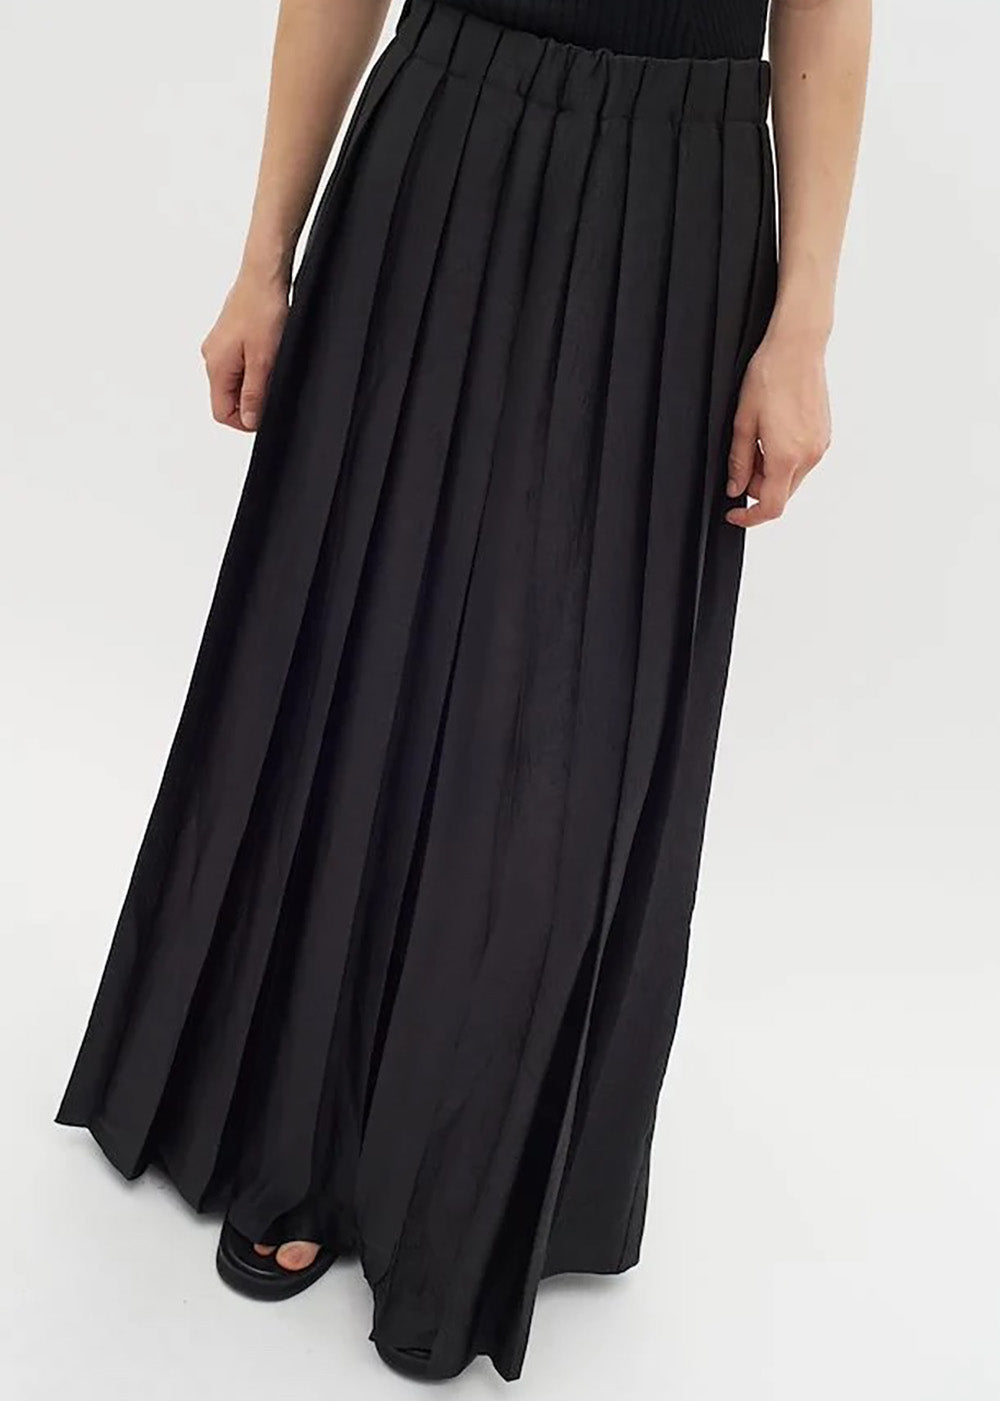 Junee Skirt - Black - InWear Canada - Danali - 30109268